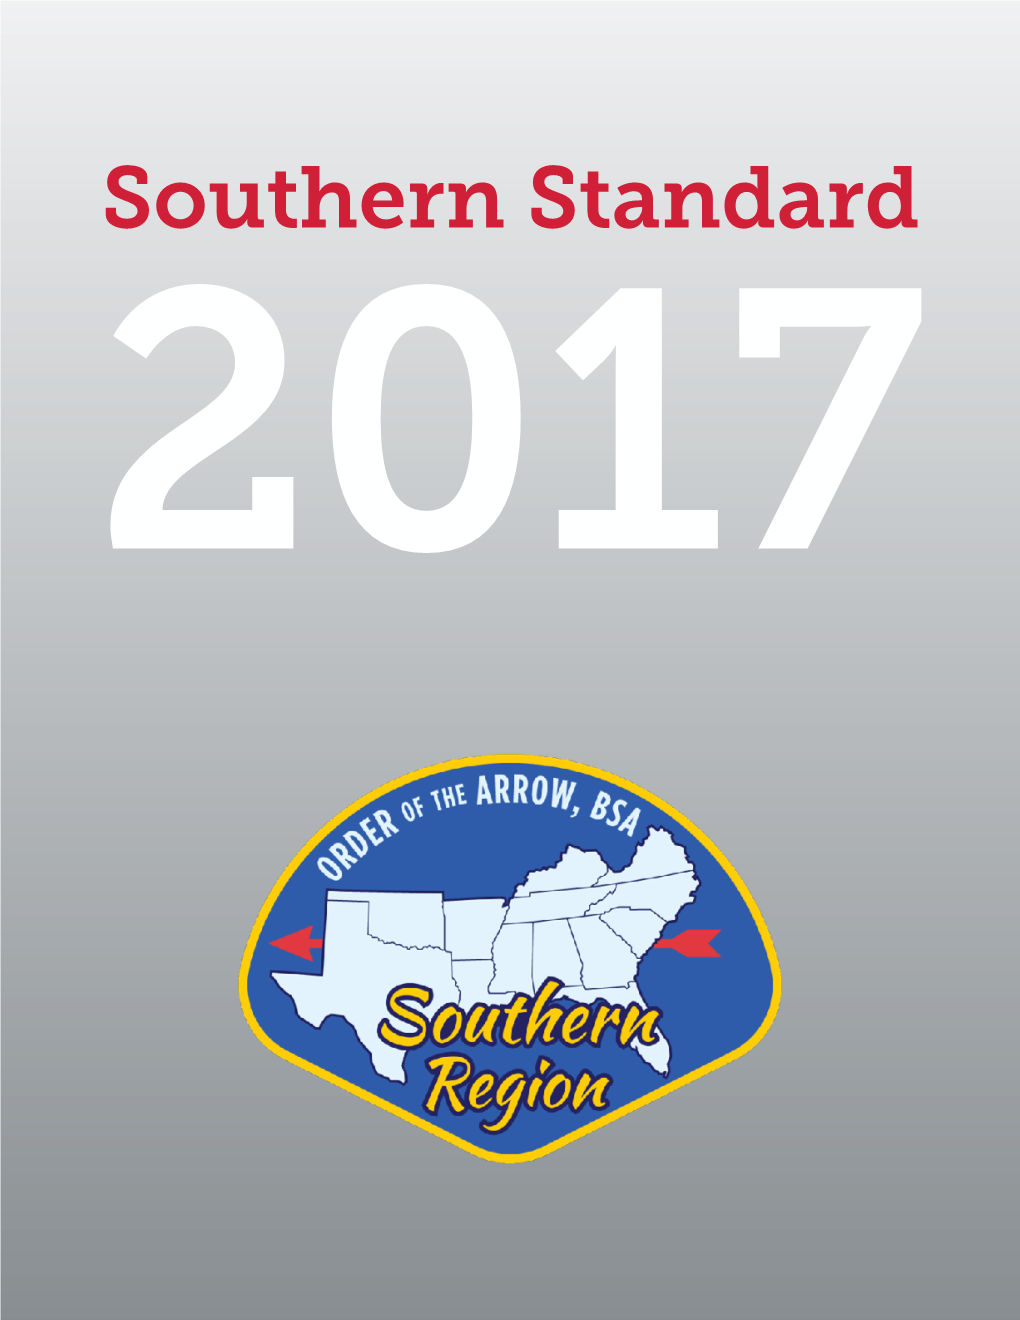 Southern Standard